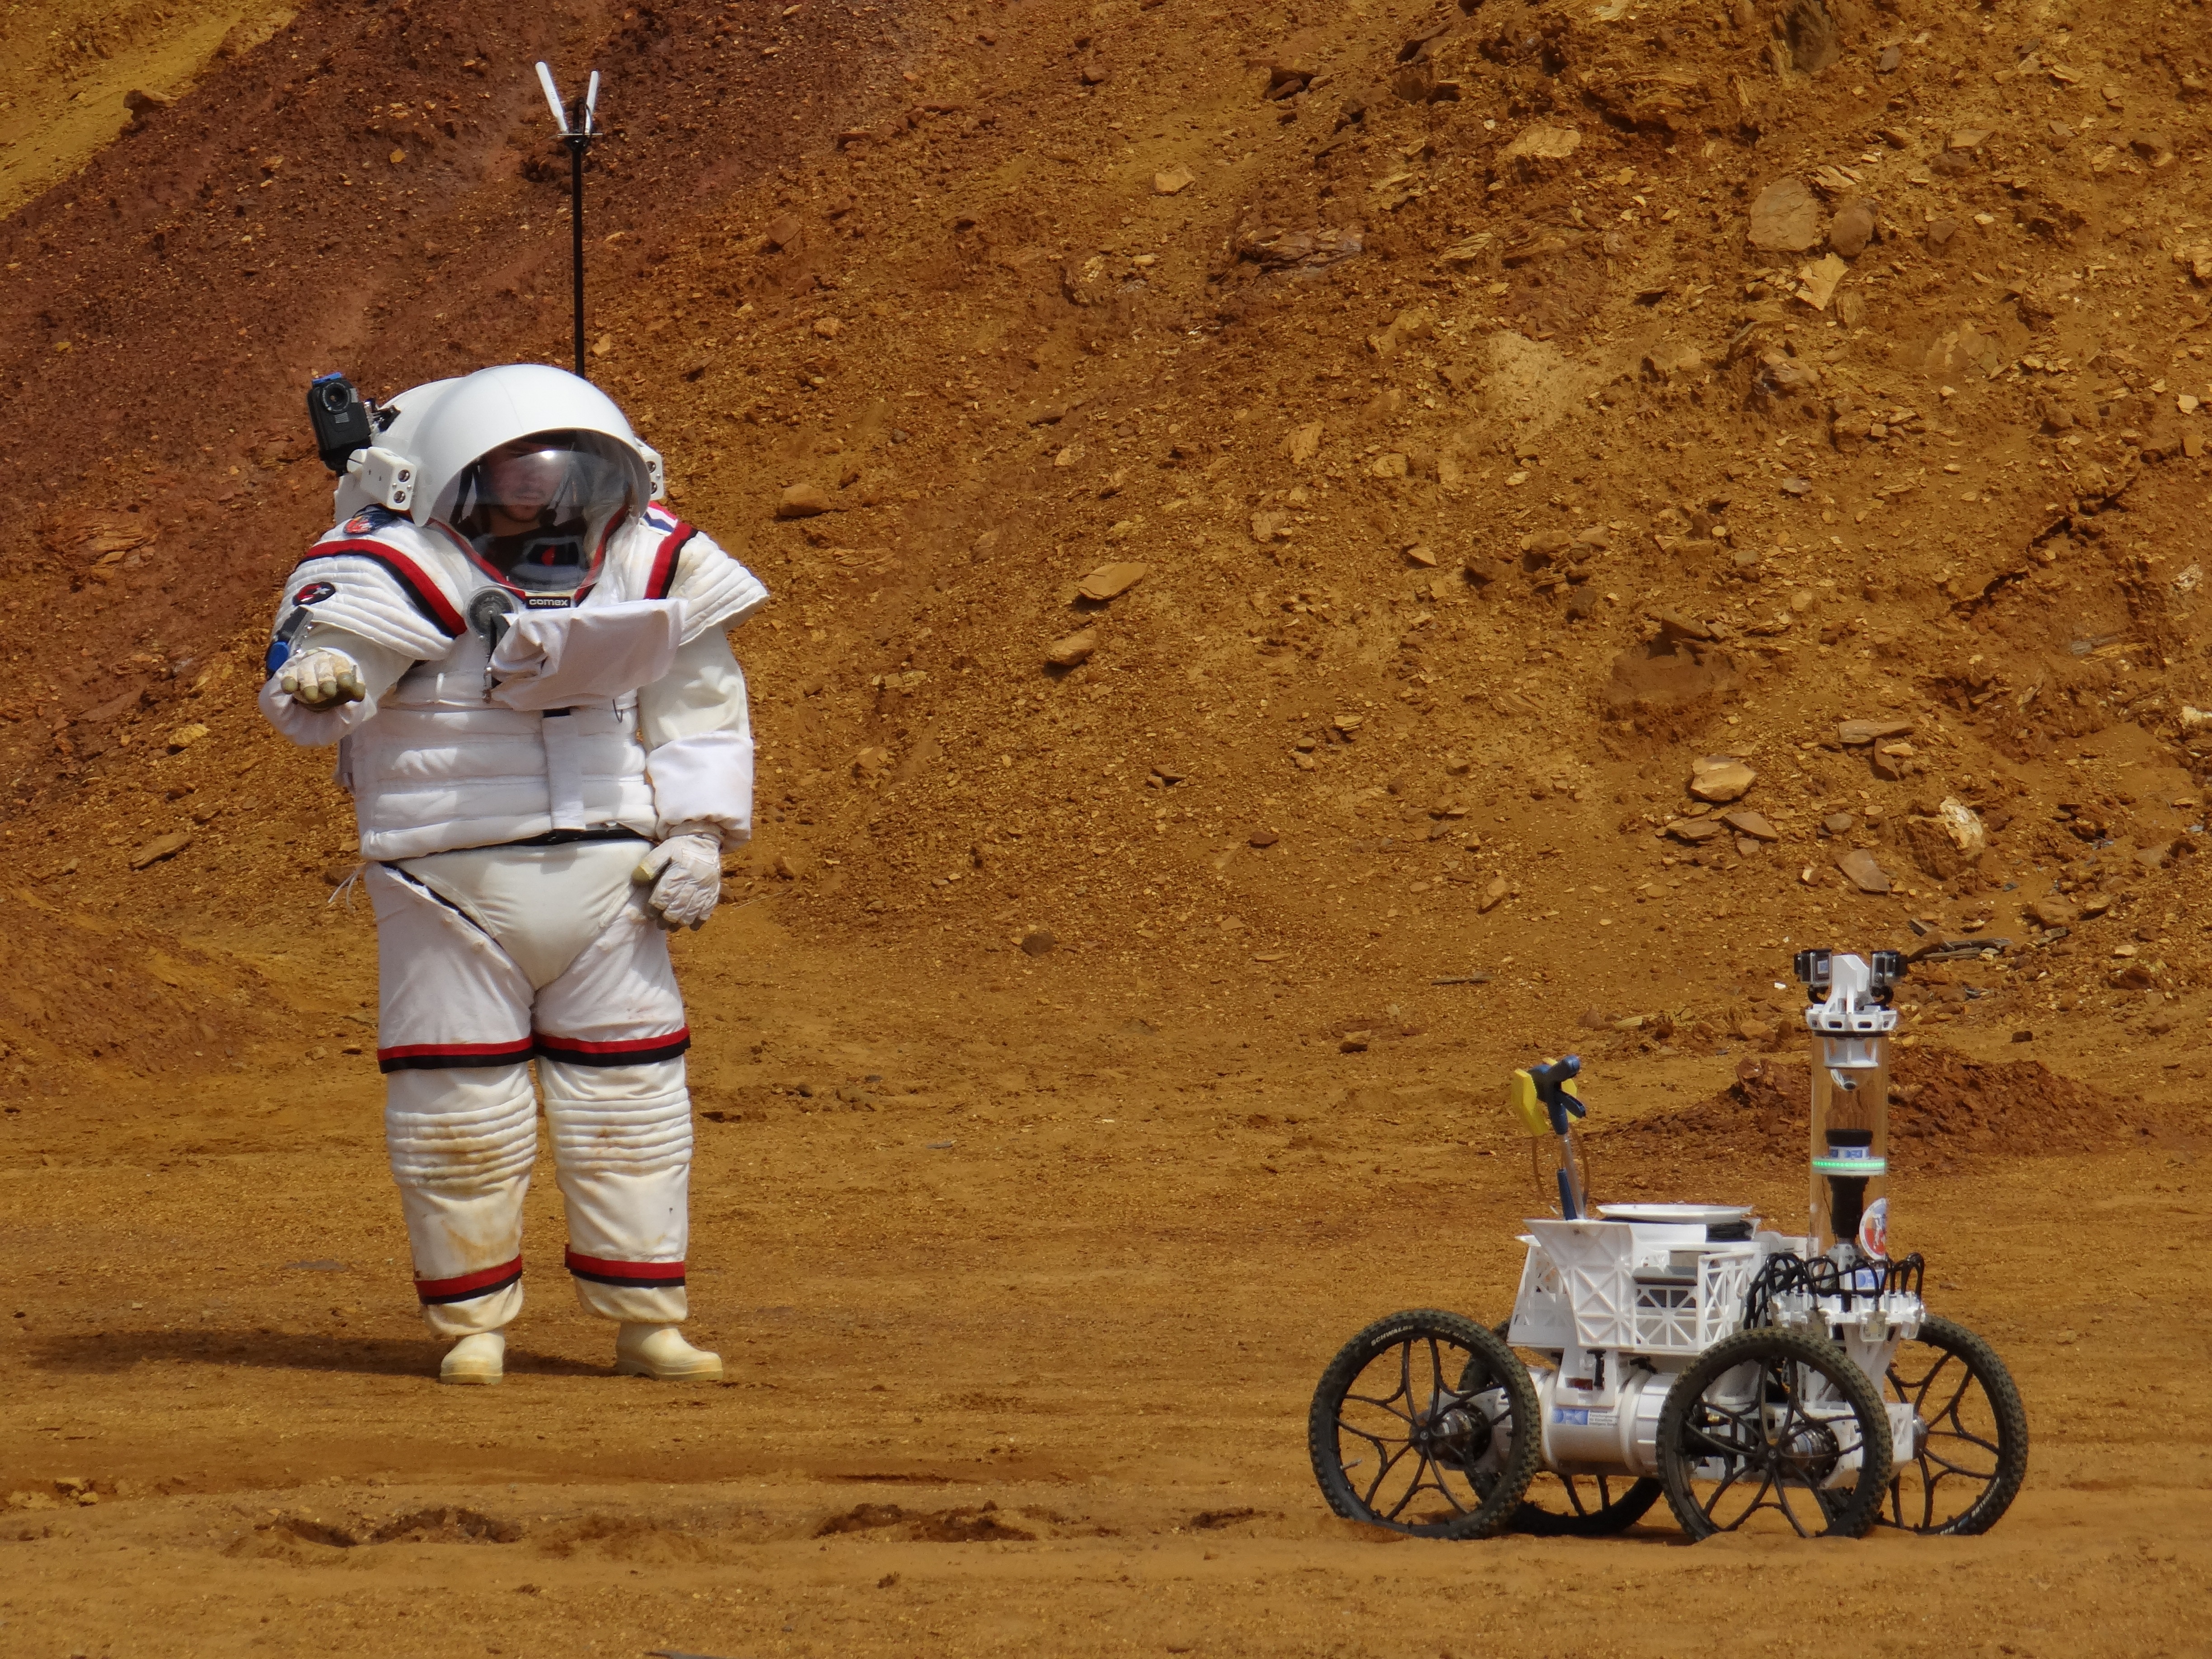 MOONWALK project astronaut - robot cooperation 2016-04-27 Rio Tinto